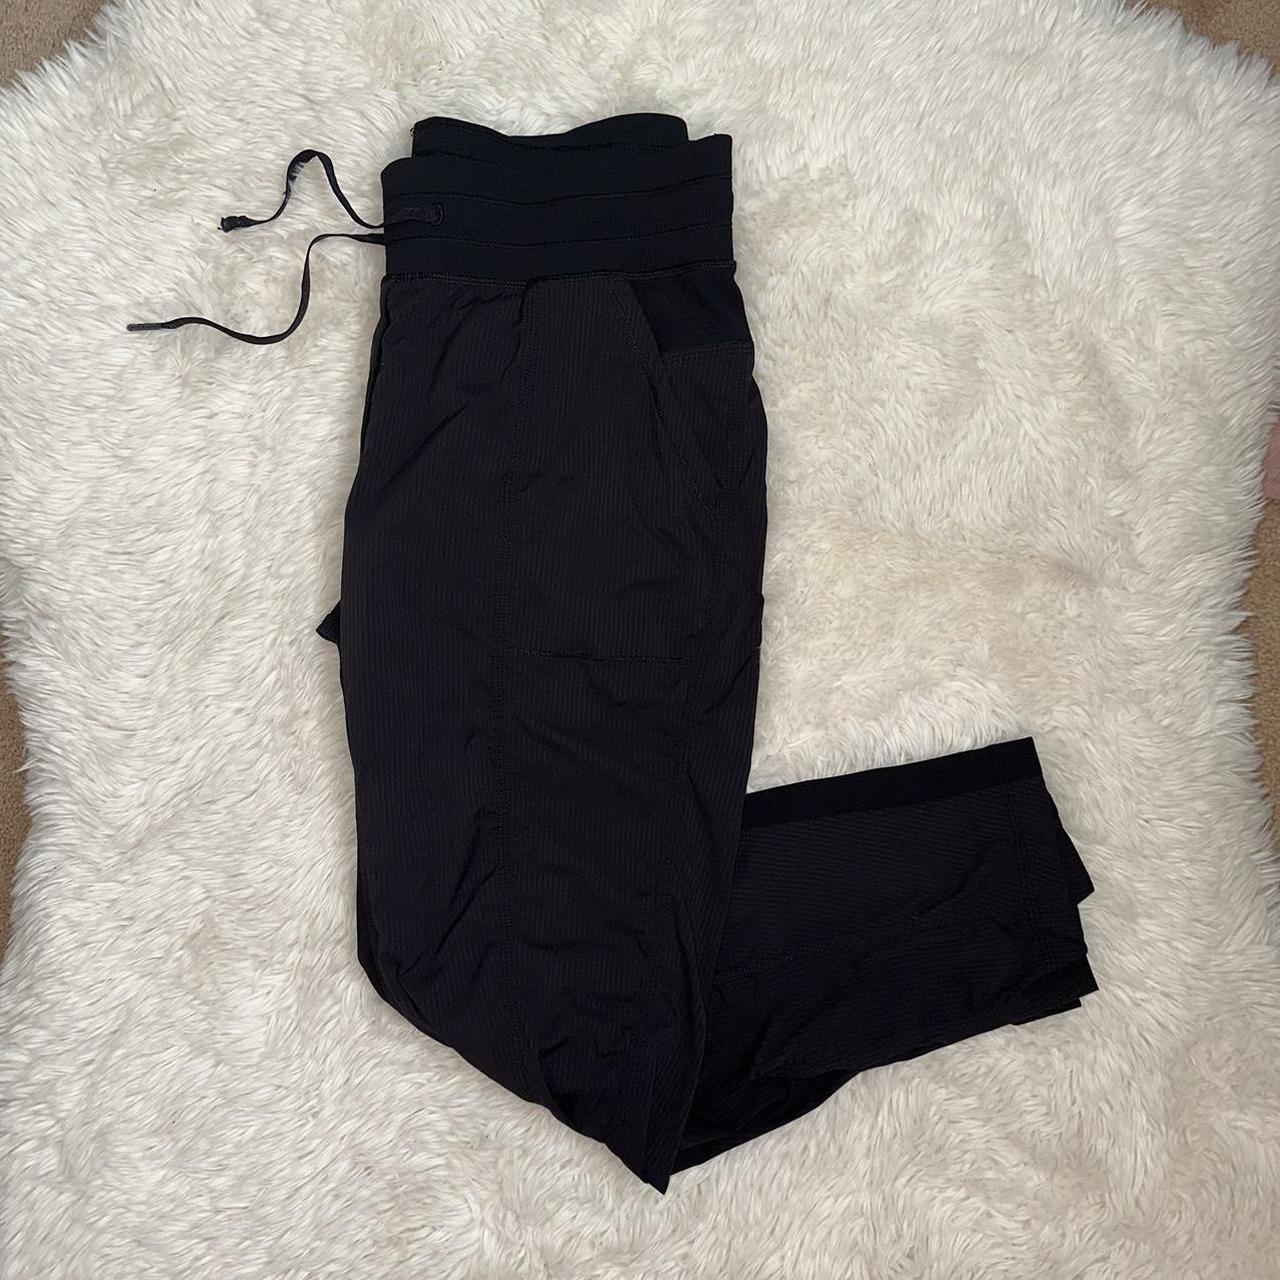 Lululemon dance studio pants, vguc, size 10